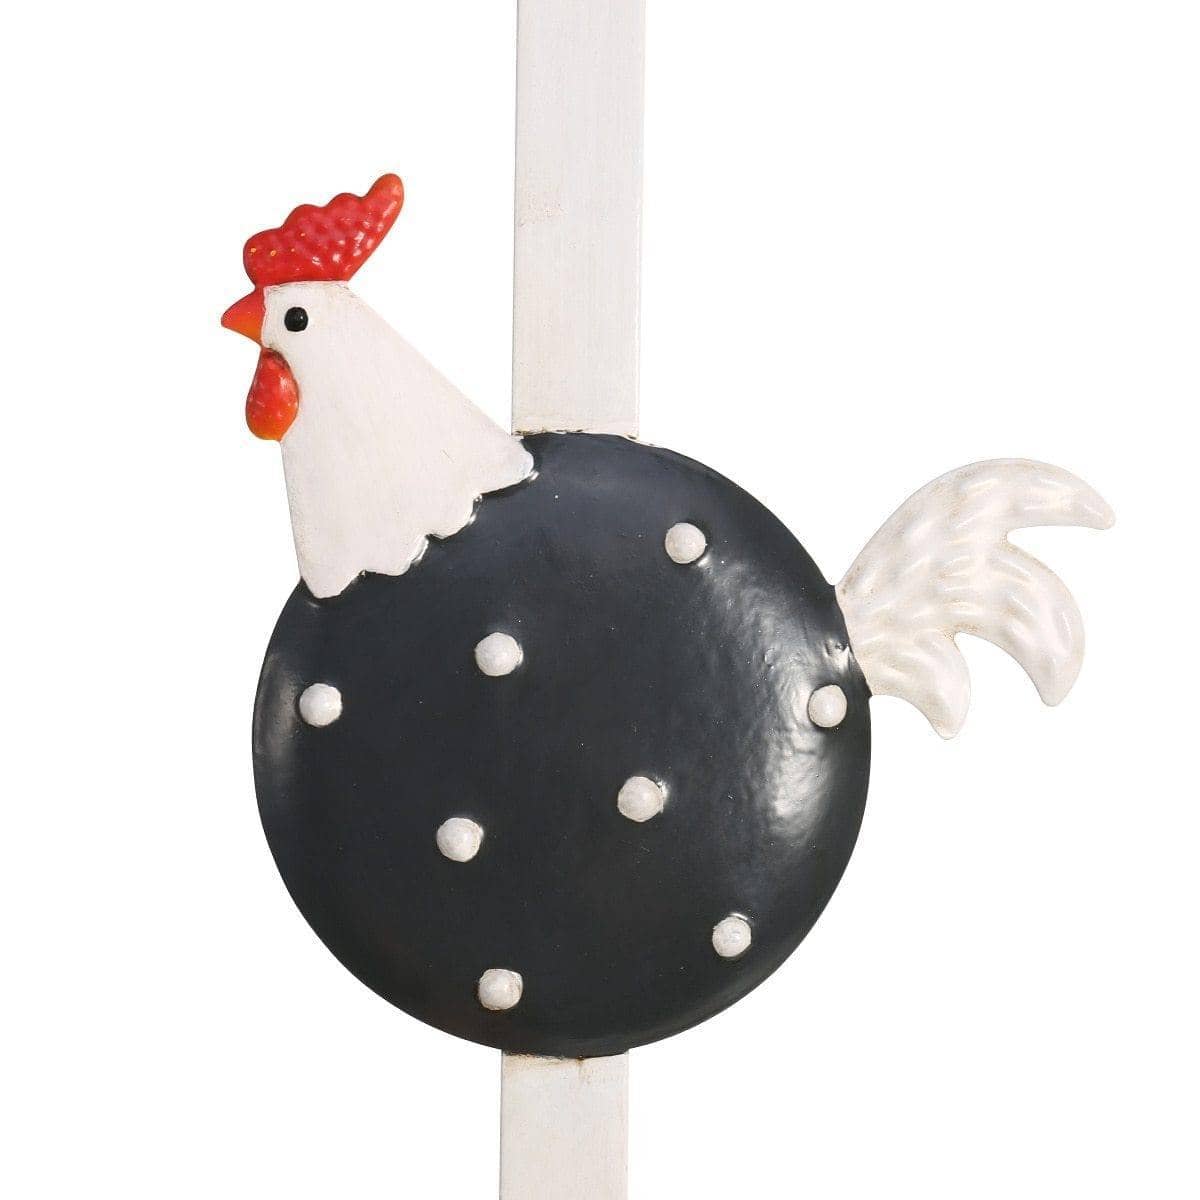 Chicken Door Hook Hanger Rack Holder - Rustic Farmhouse Decor for Your Home